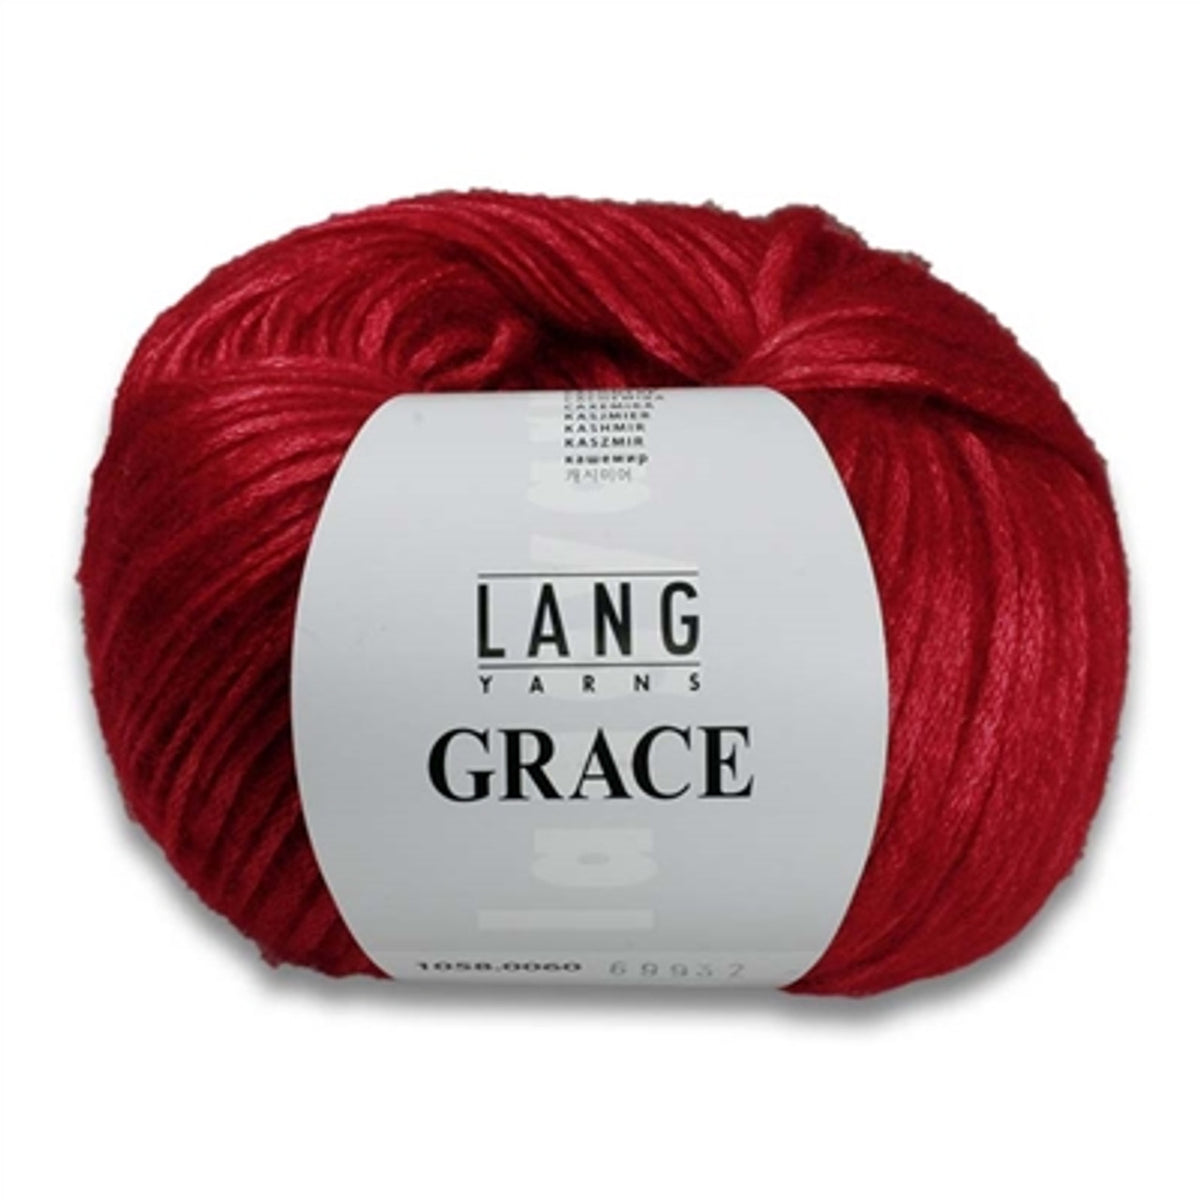 Lang Yarns - Grace - ON SALE!